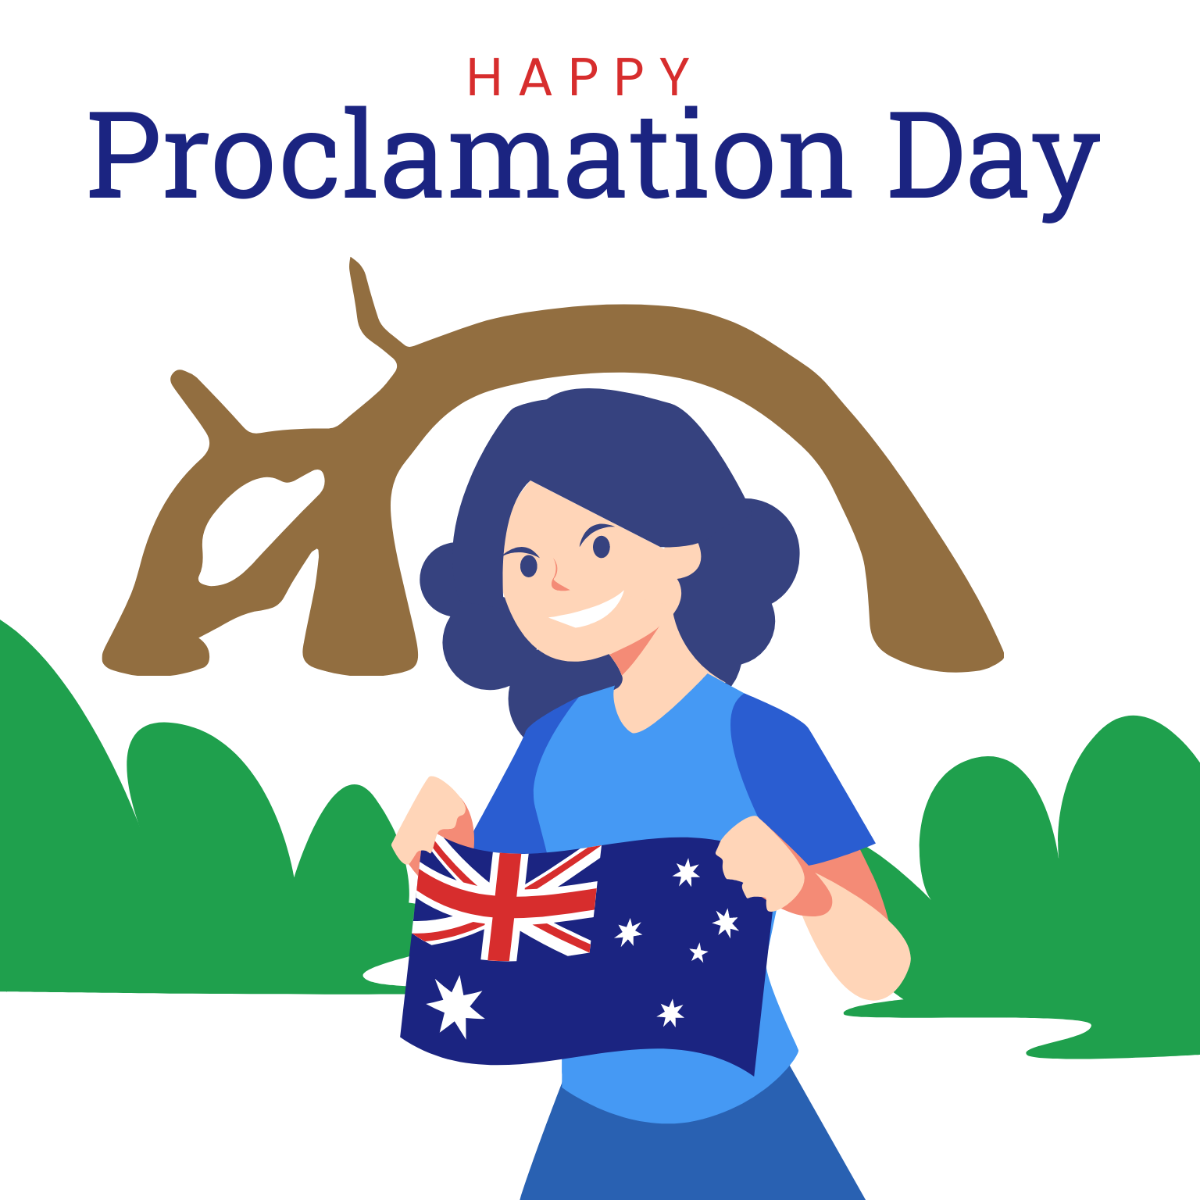 Happy Proclamation Day Illustration